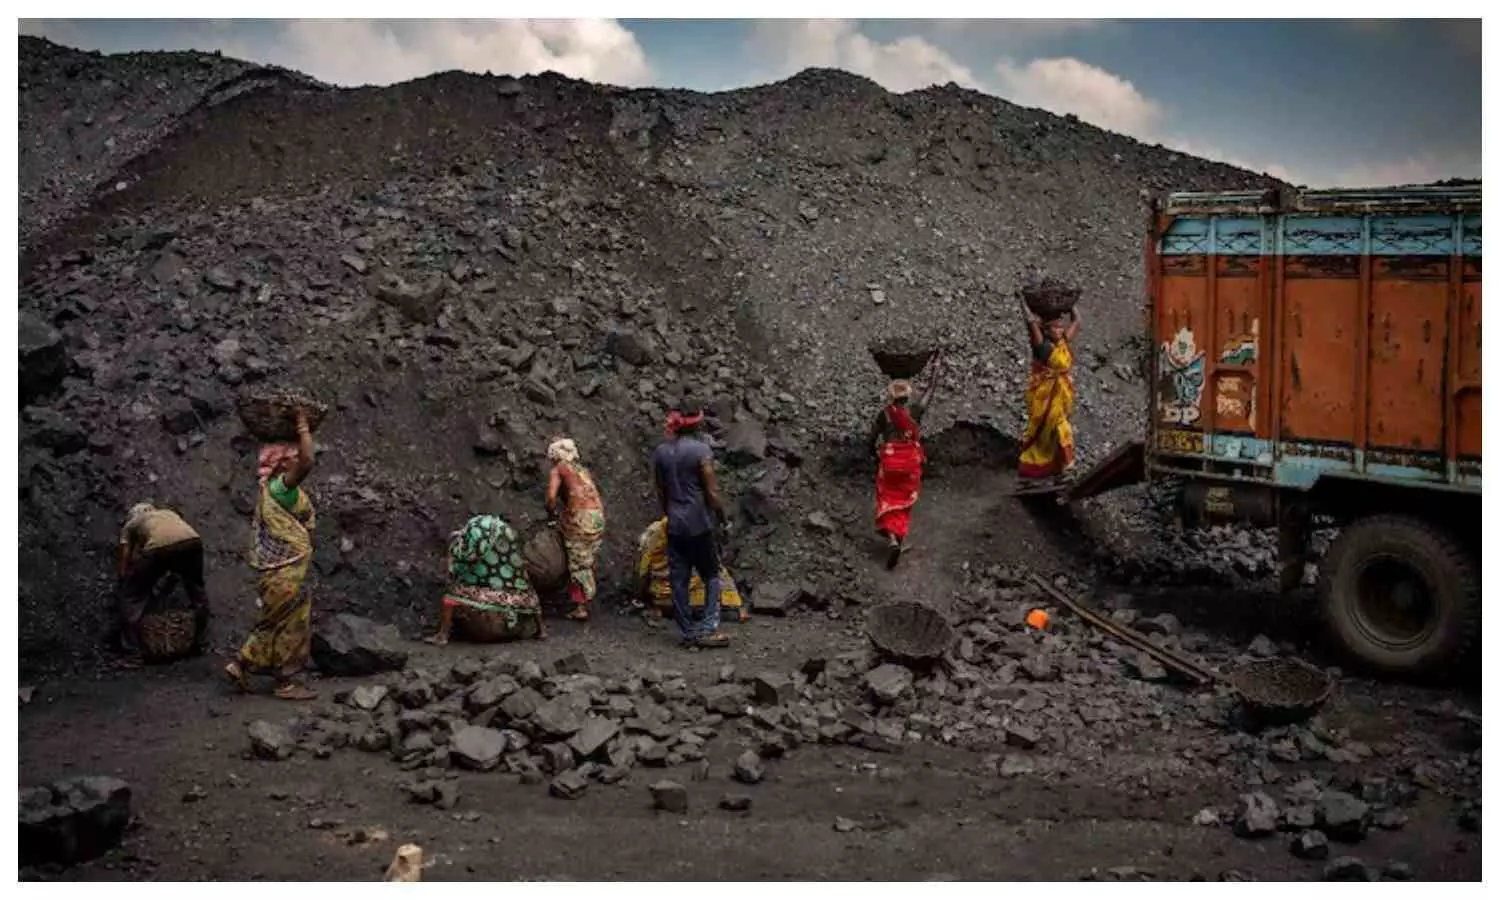 Coal Production